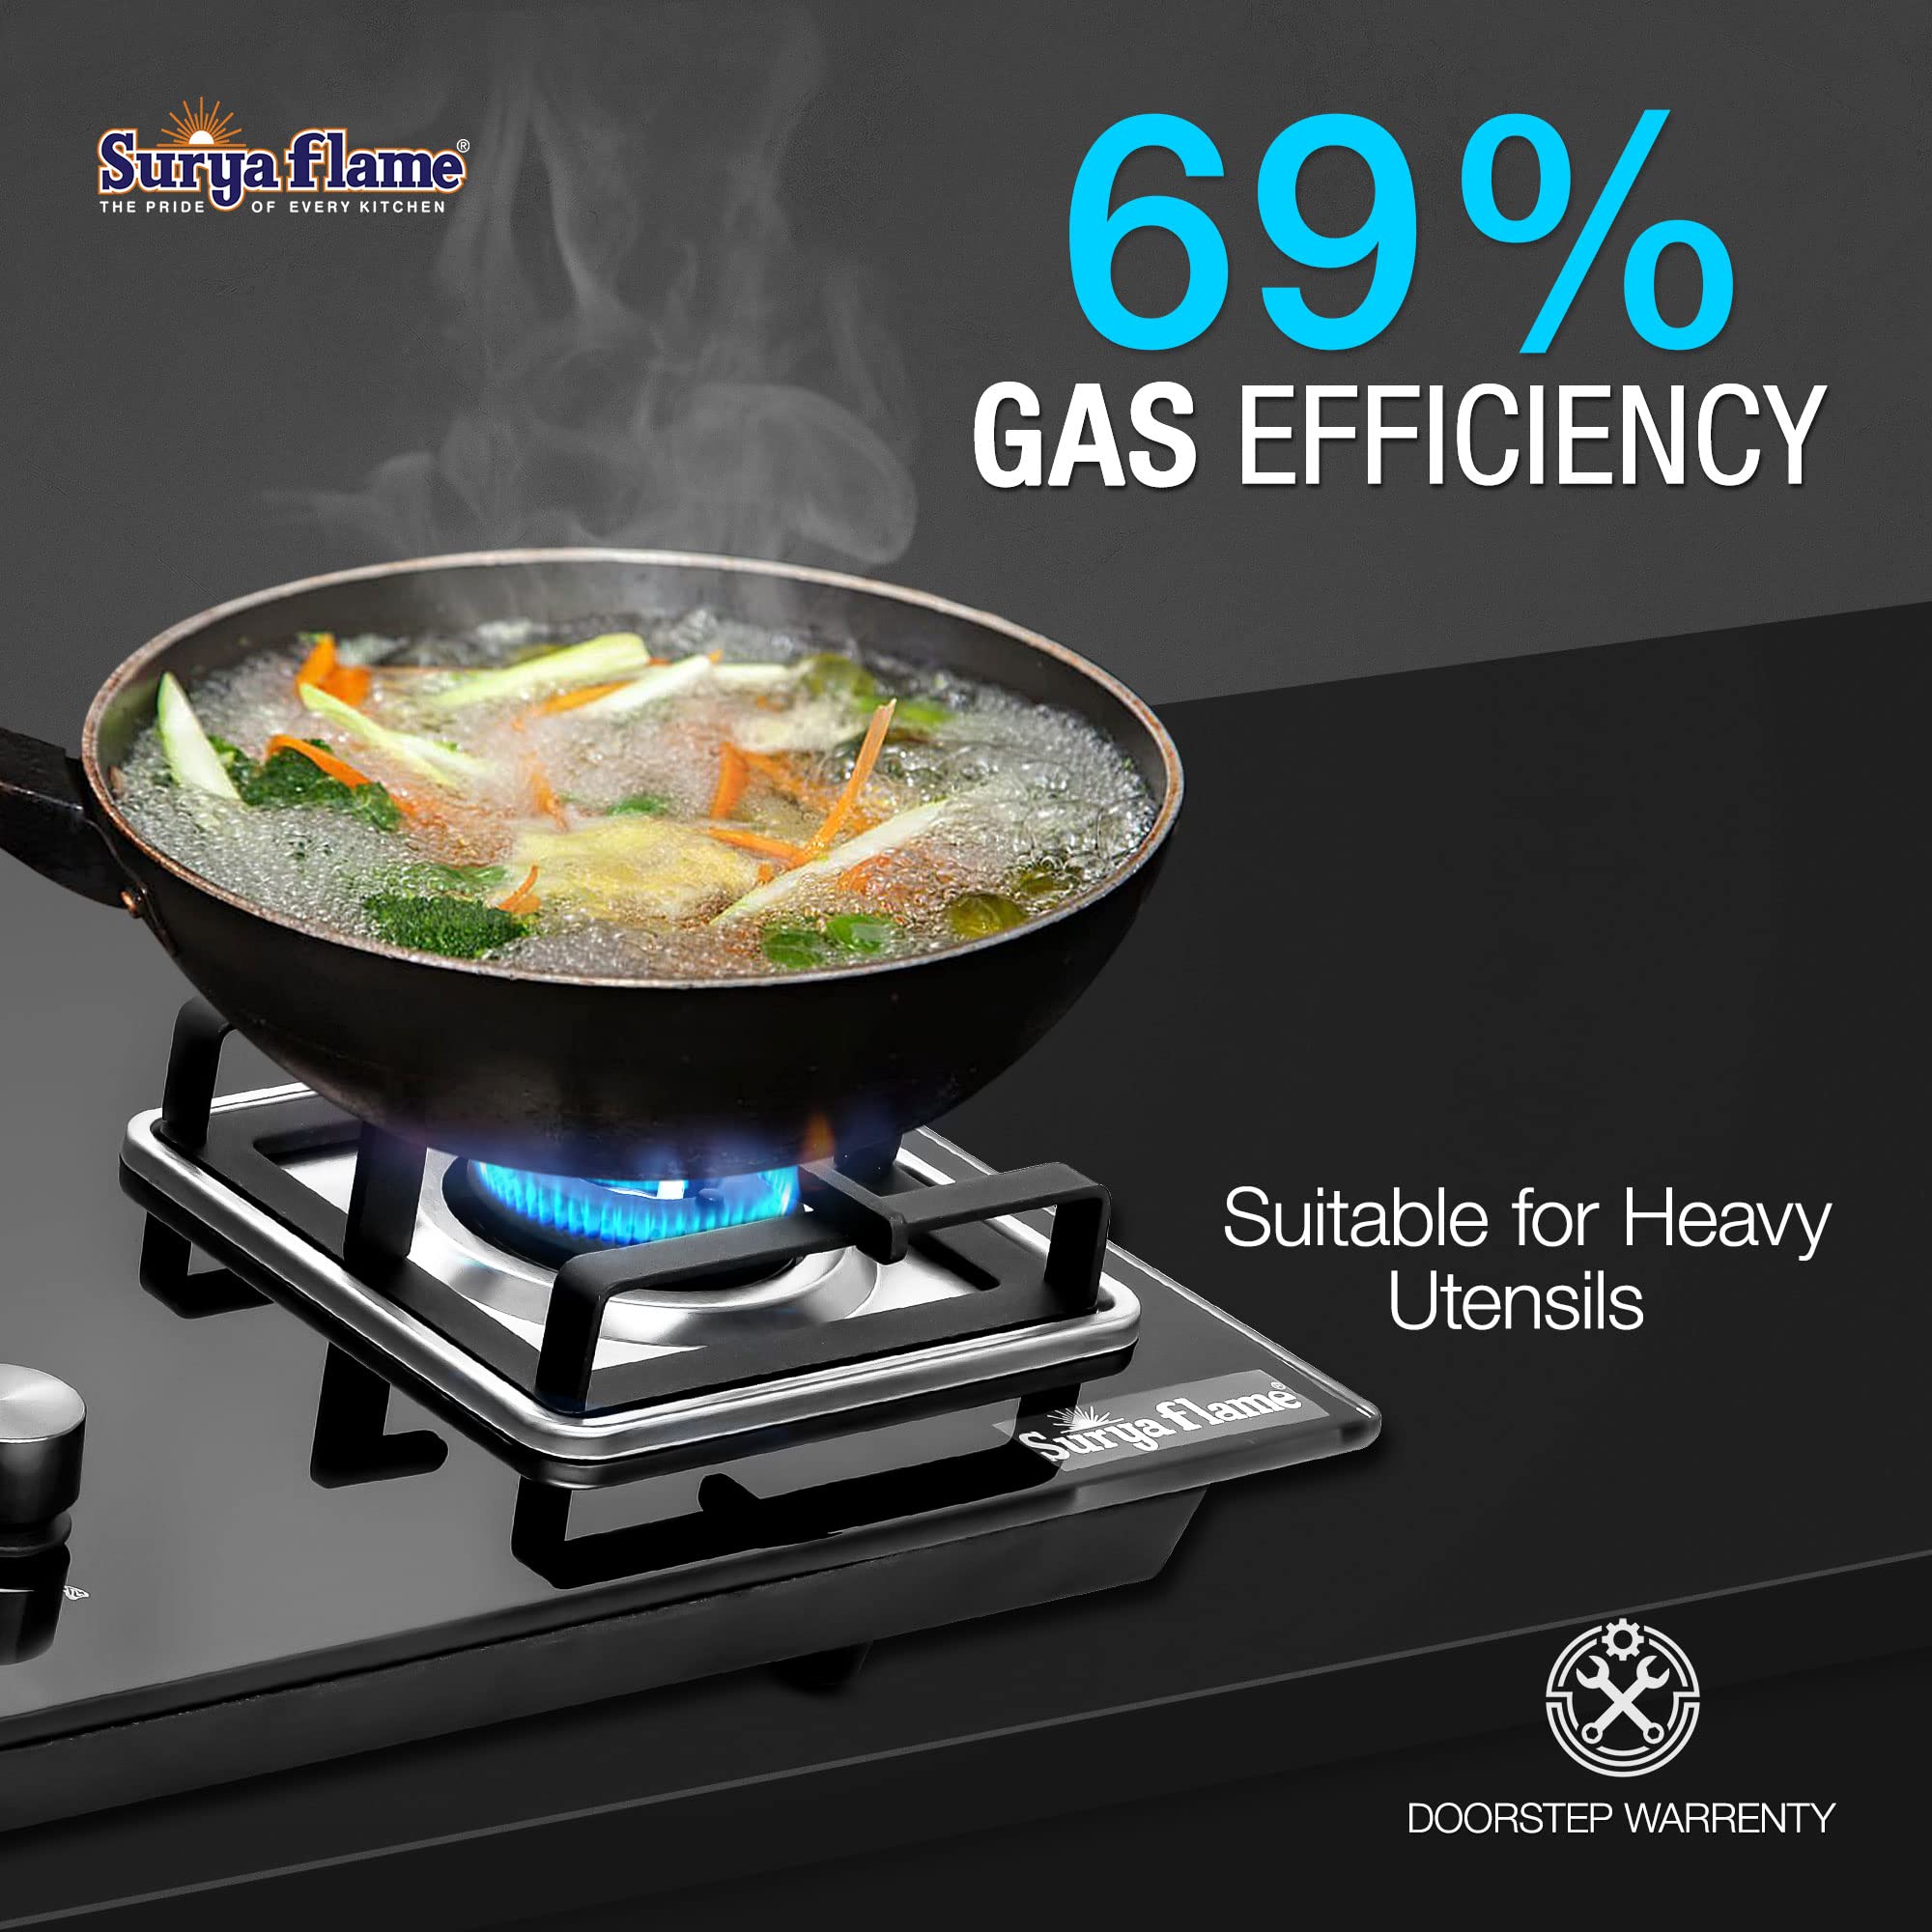 Surya Flame ADORE 4 Burner Glass Top, Black Body LPG Stove with 69% Thermal Efficiency - 2 Years Complete Doorstep Warranty